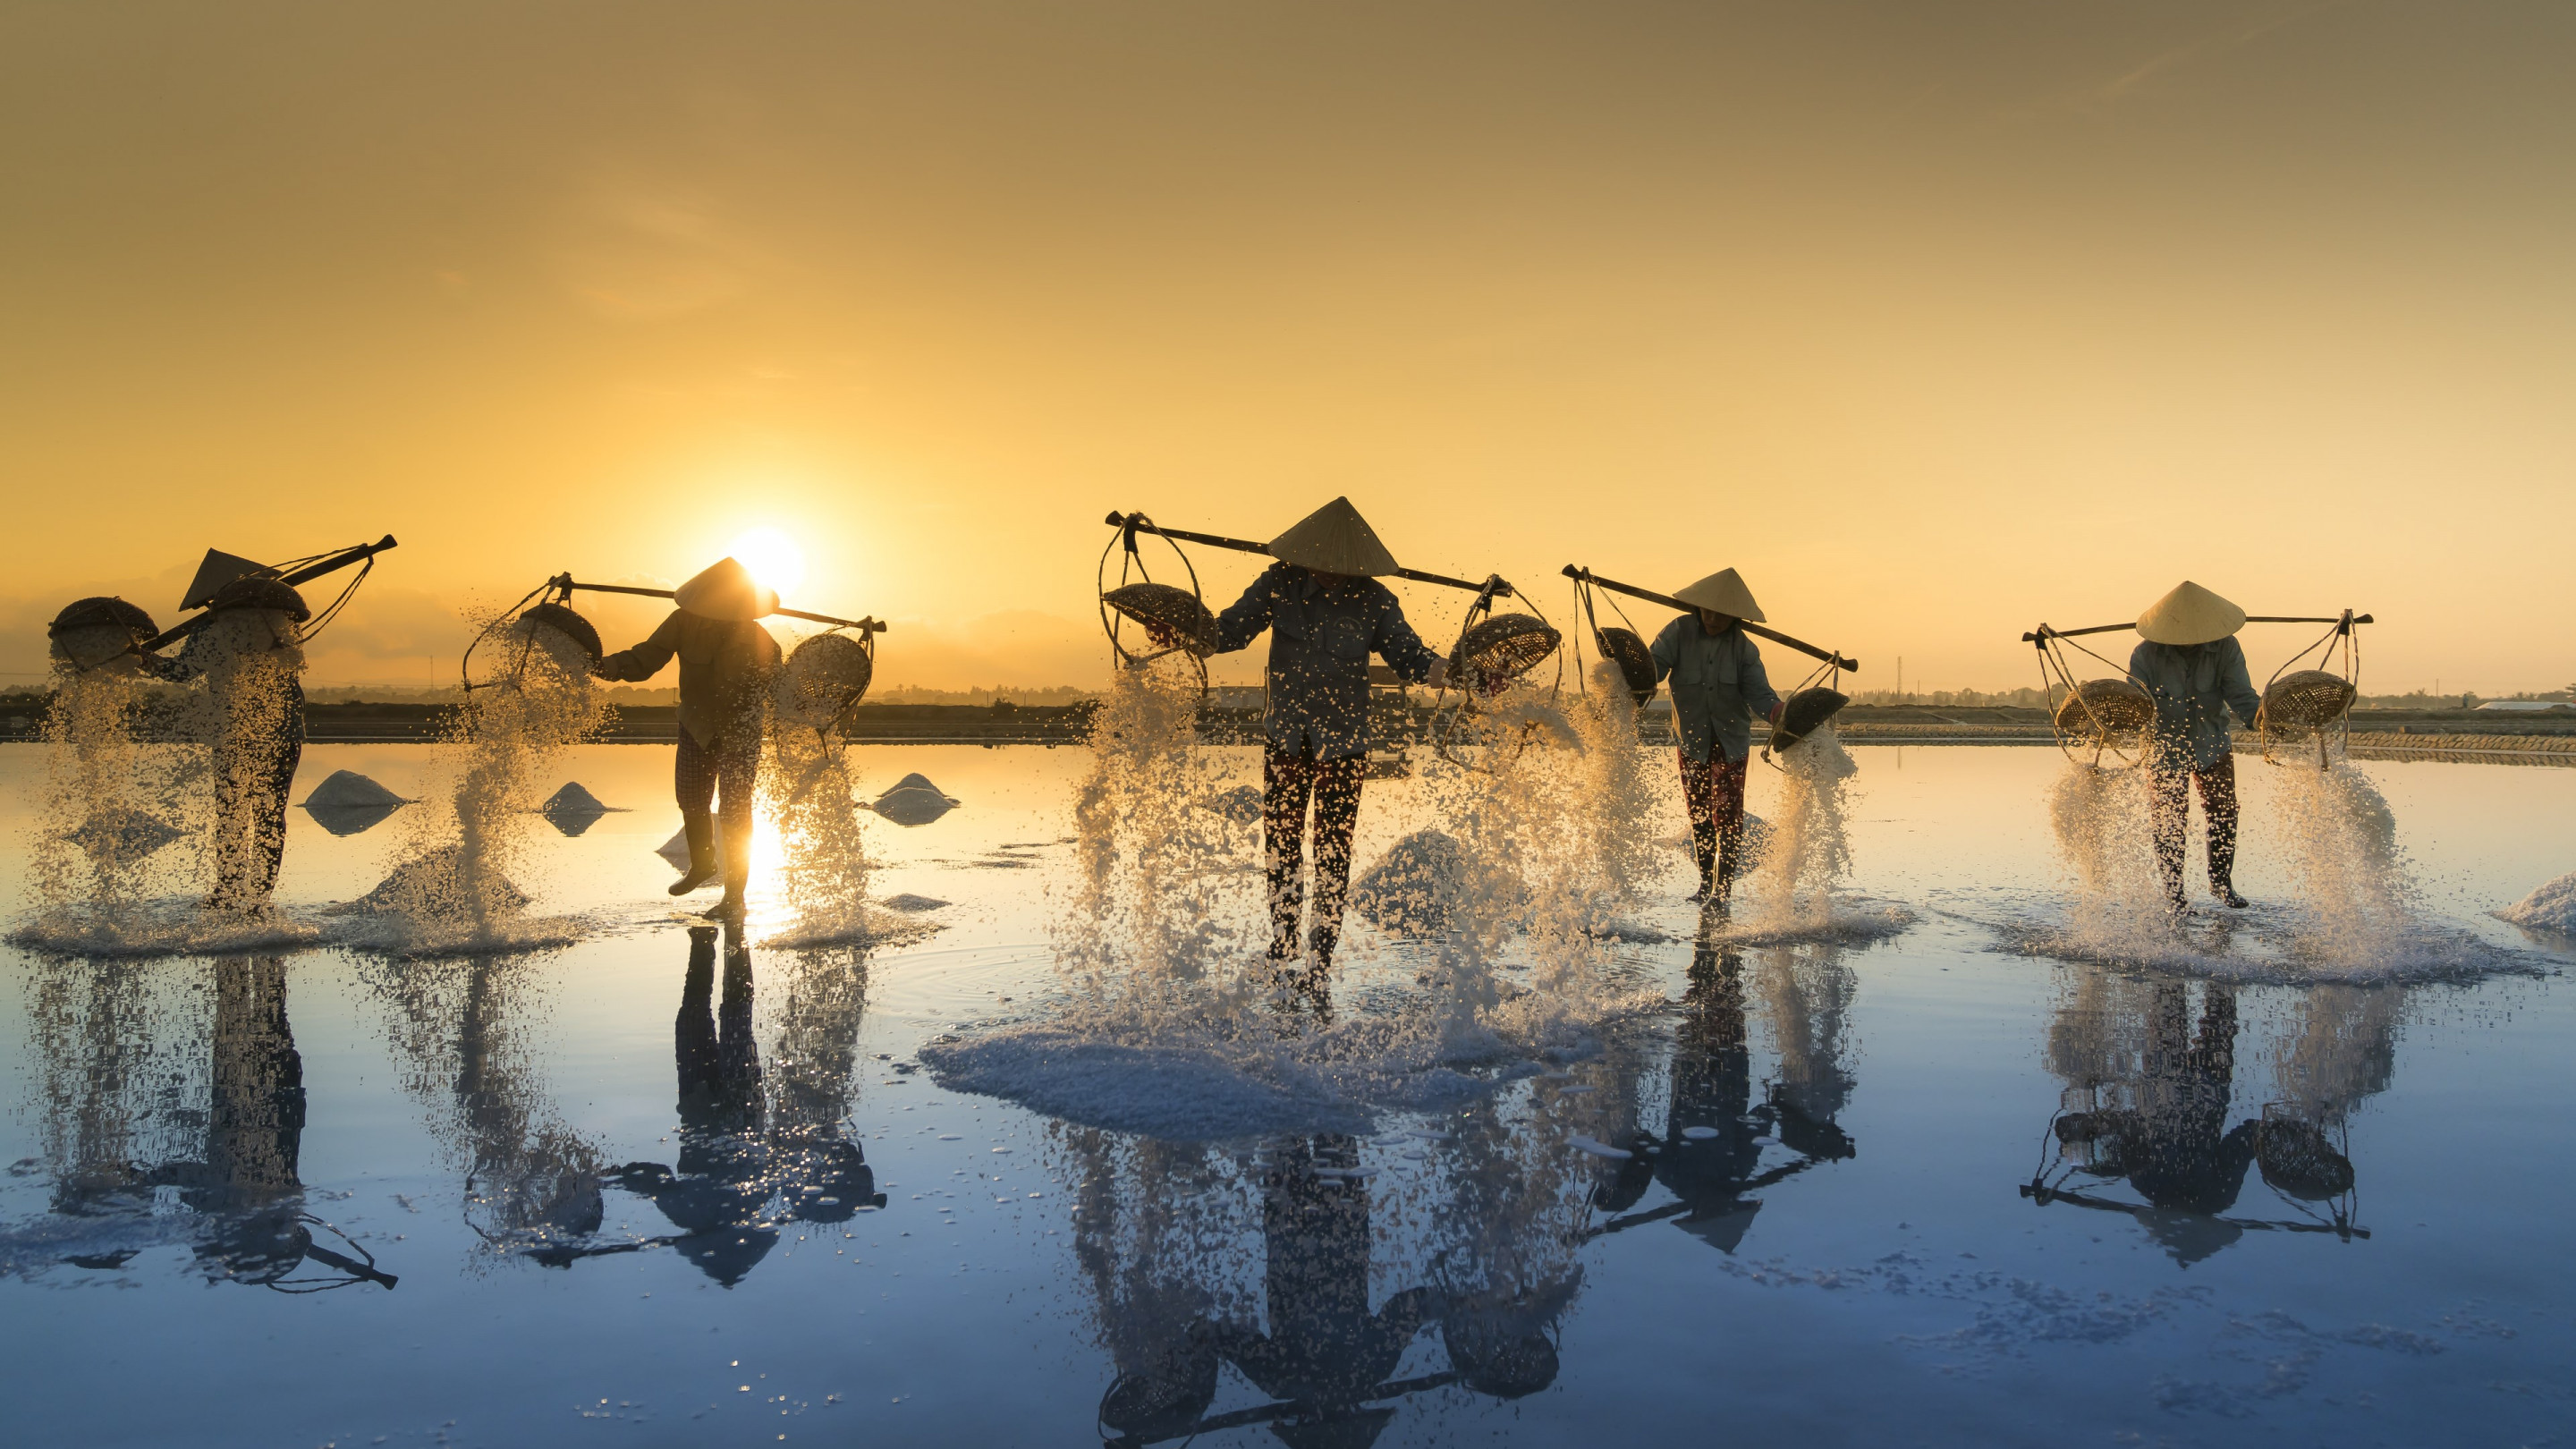 People harvesting salt in Vietnam wallpaper 2880x1620